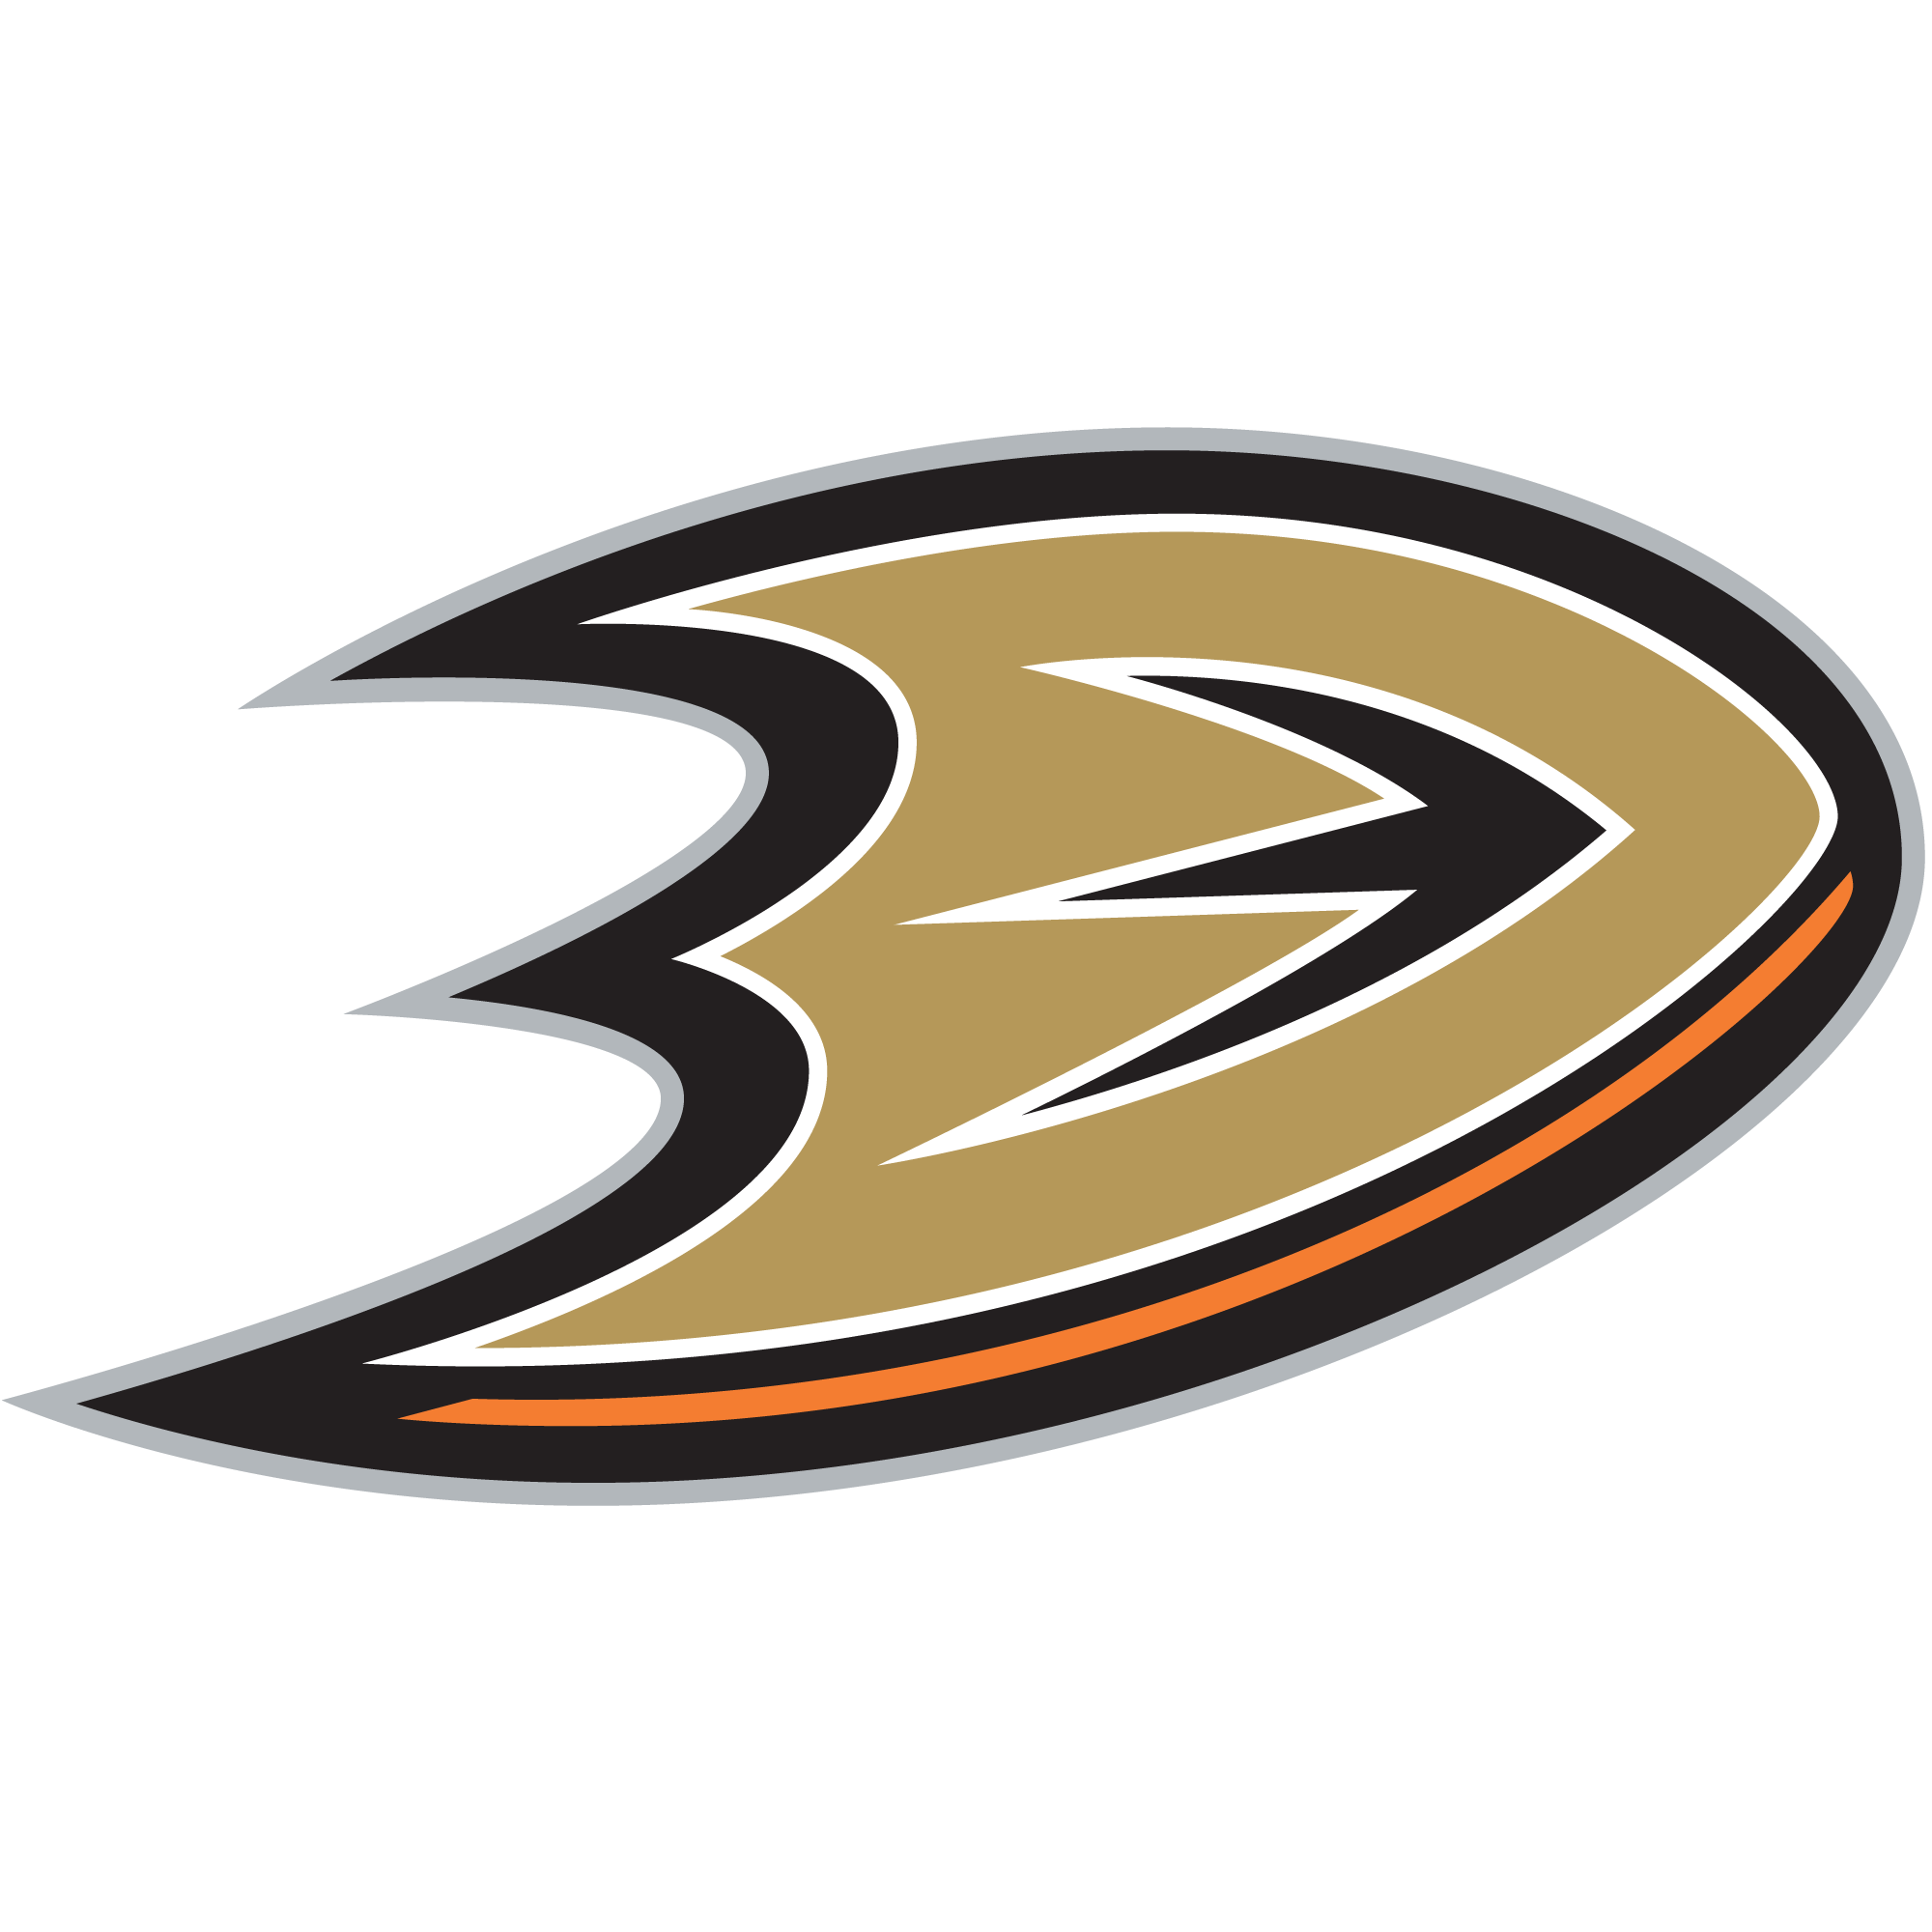 Event Feedback: Anaheim Ducks - NHL vs New York Islanders